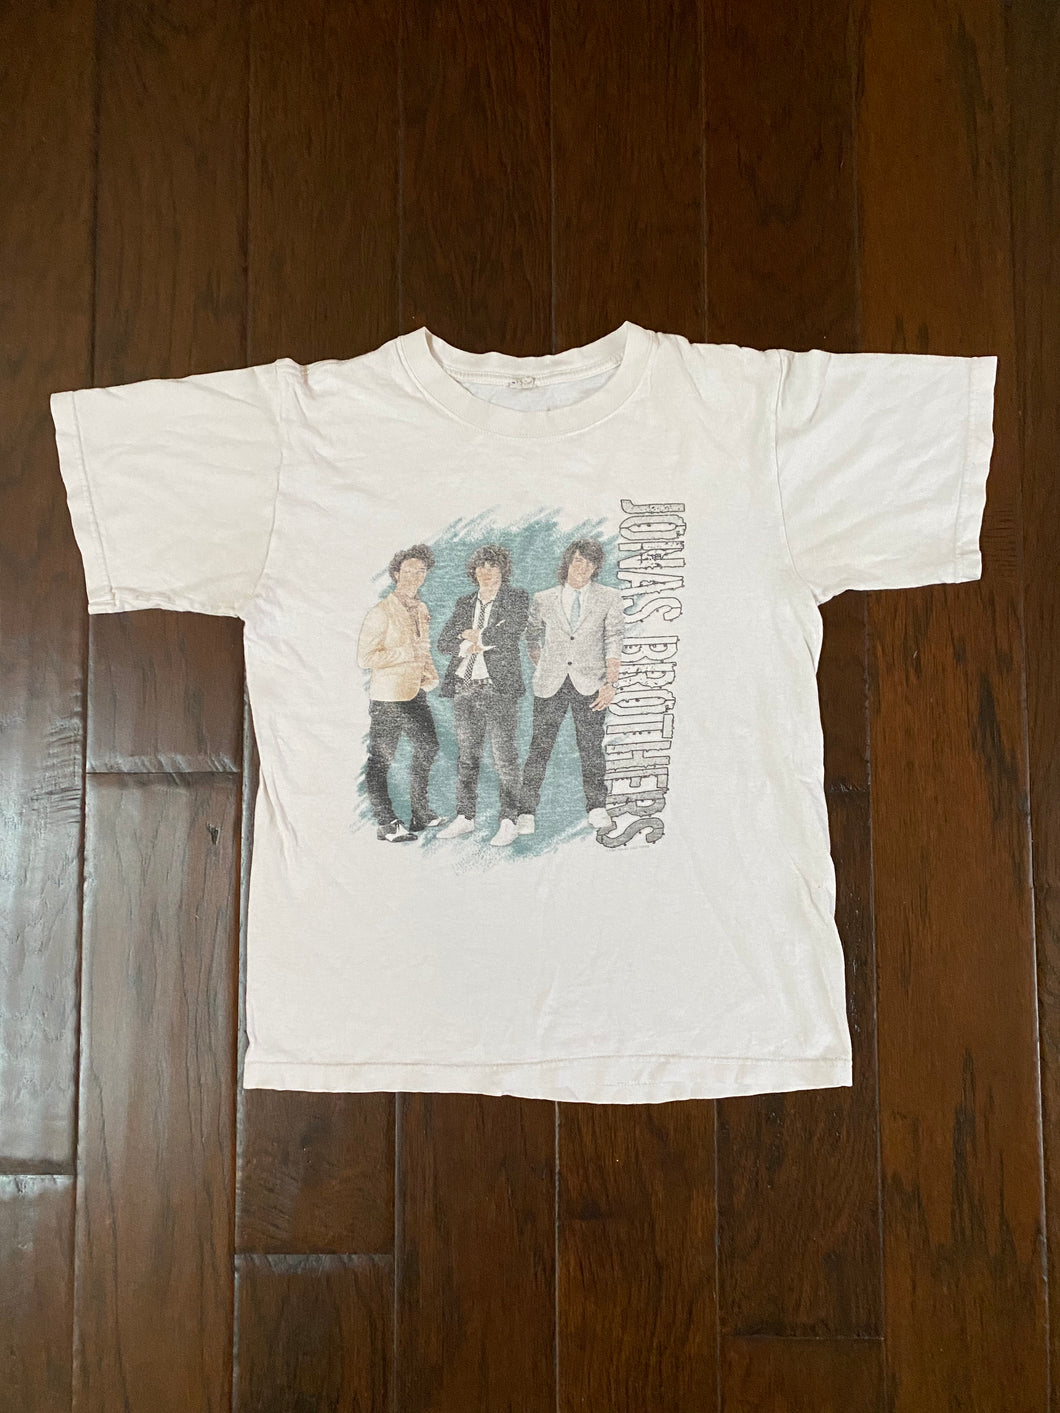 Jonas Brothers 2008 Tour Vintage Distressed T-shirt